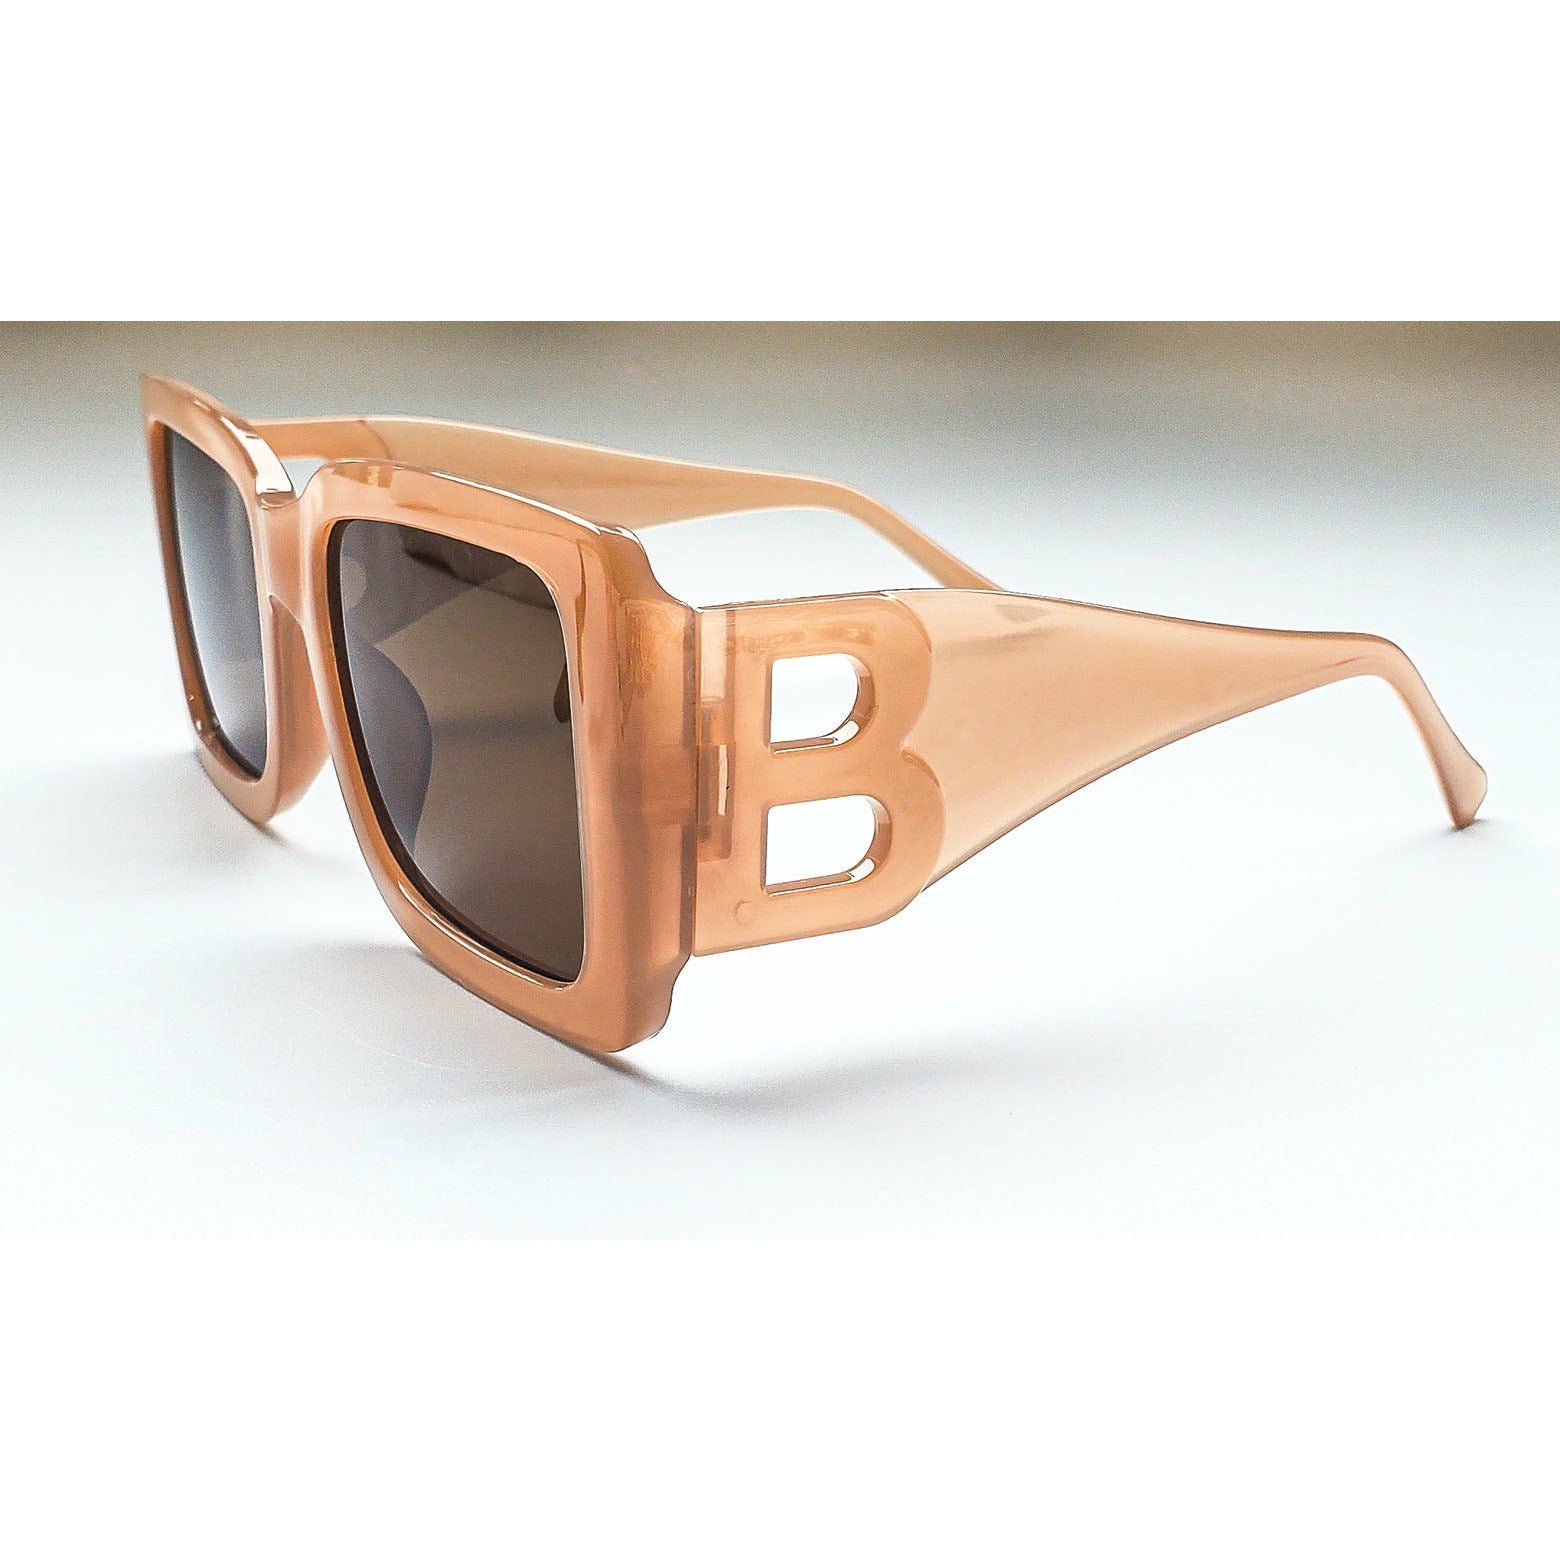 B Motif Letter Sunglasses